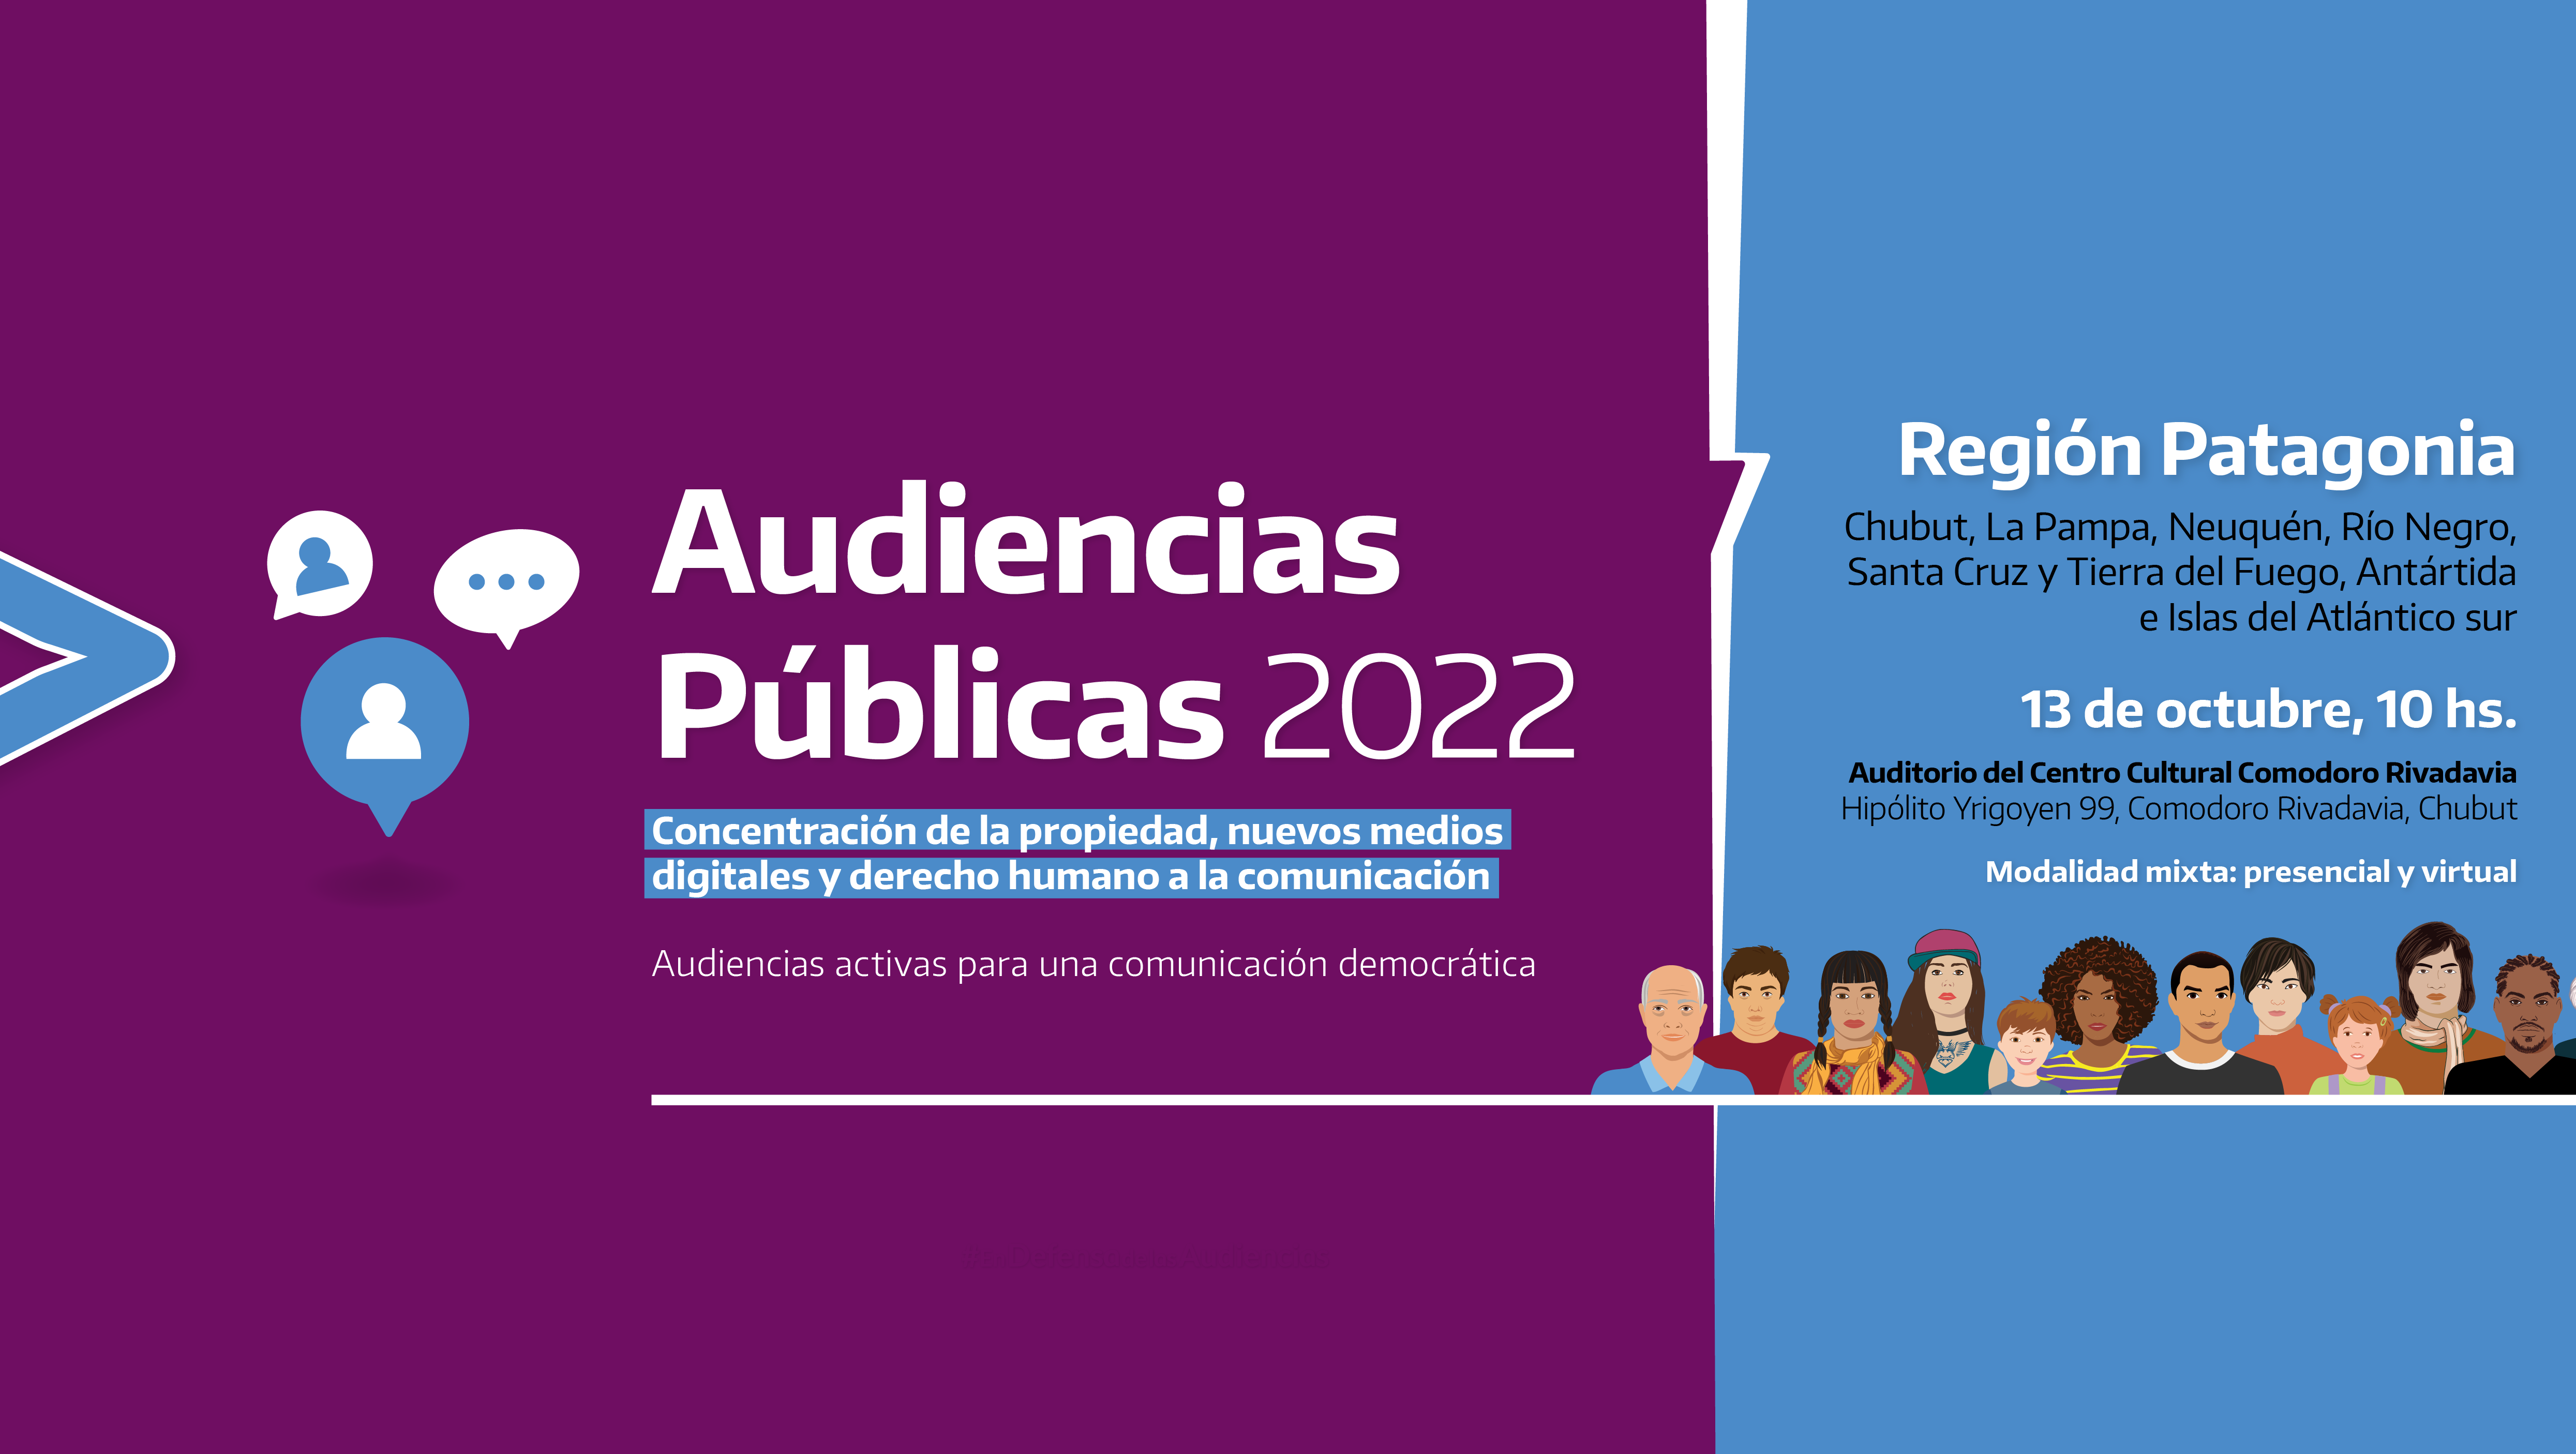 Audiencias Públicas 2022 Patagonia